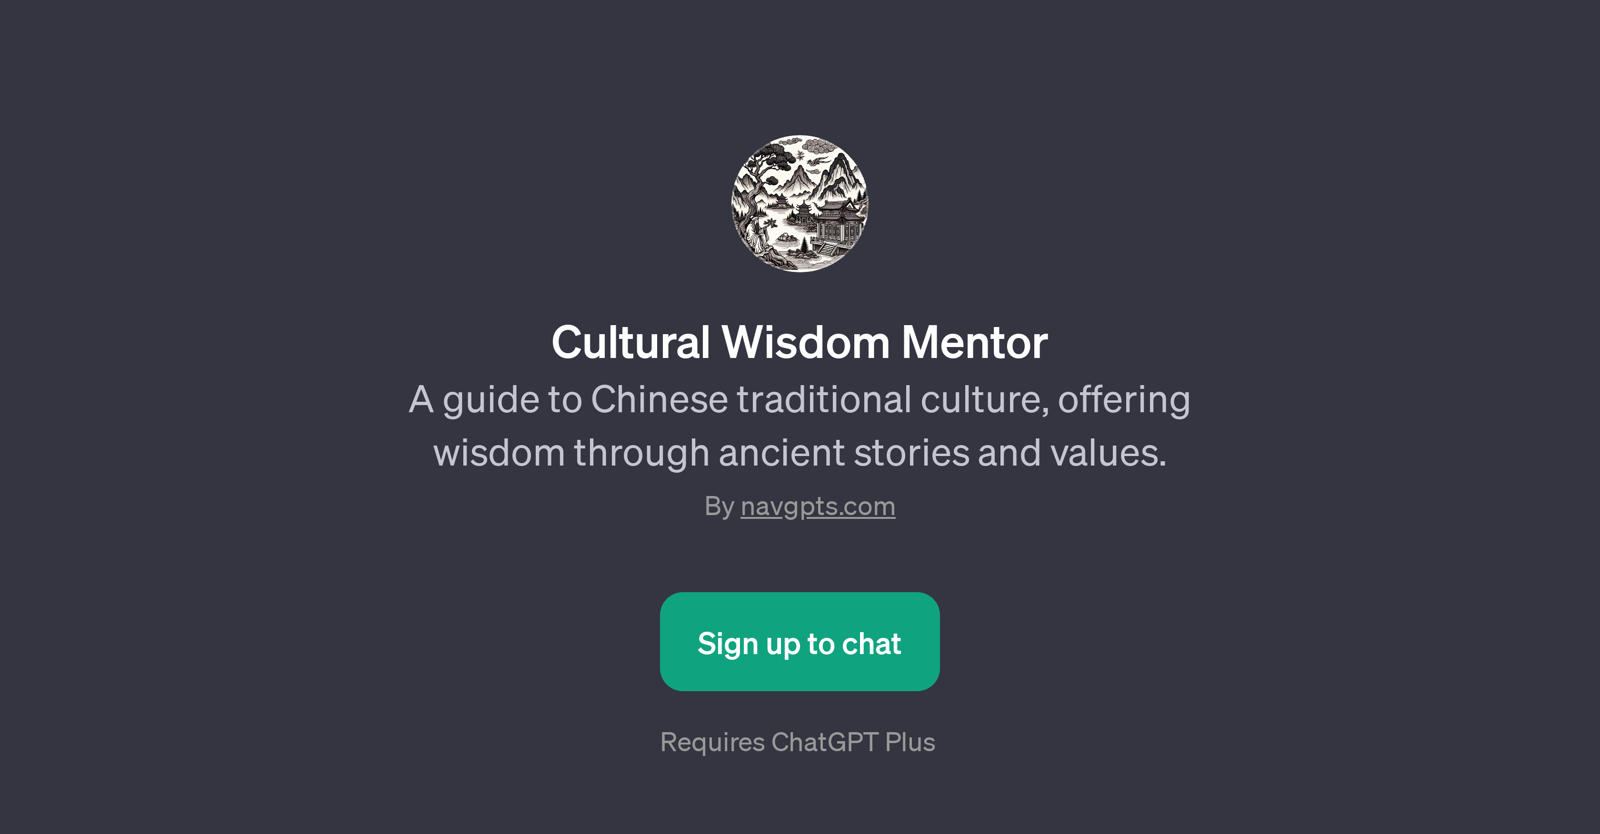 Cultural Wisdom Mentor website